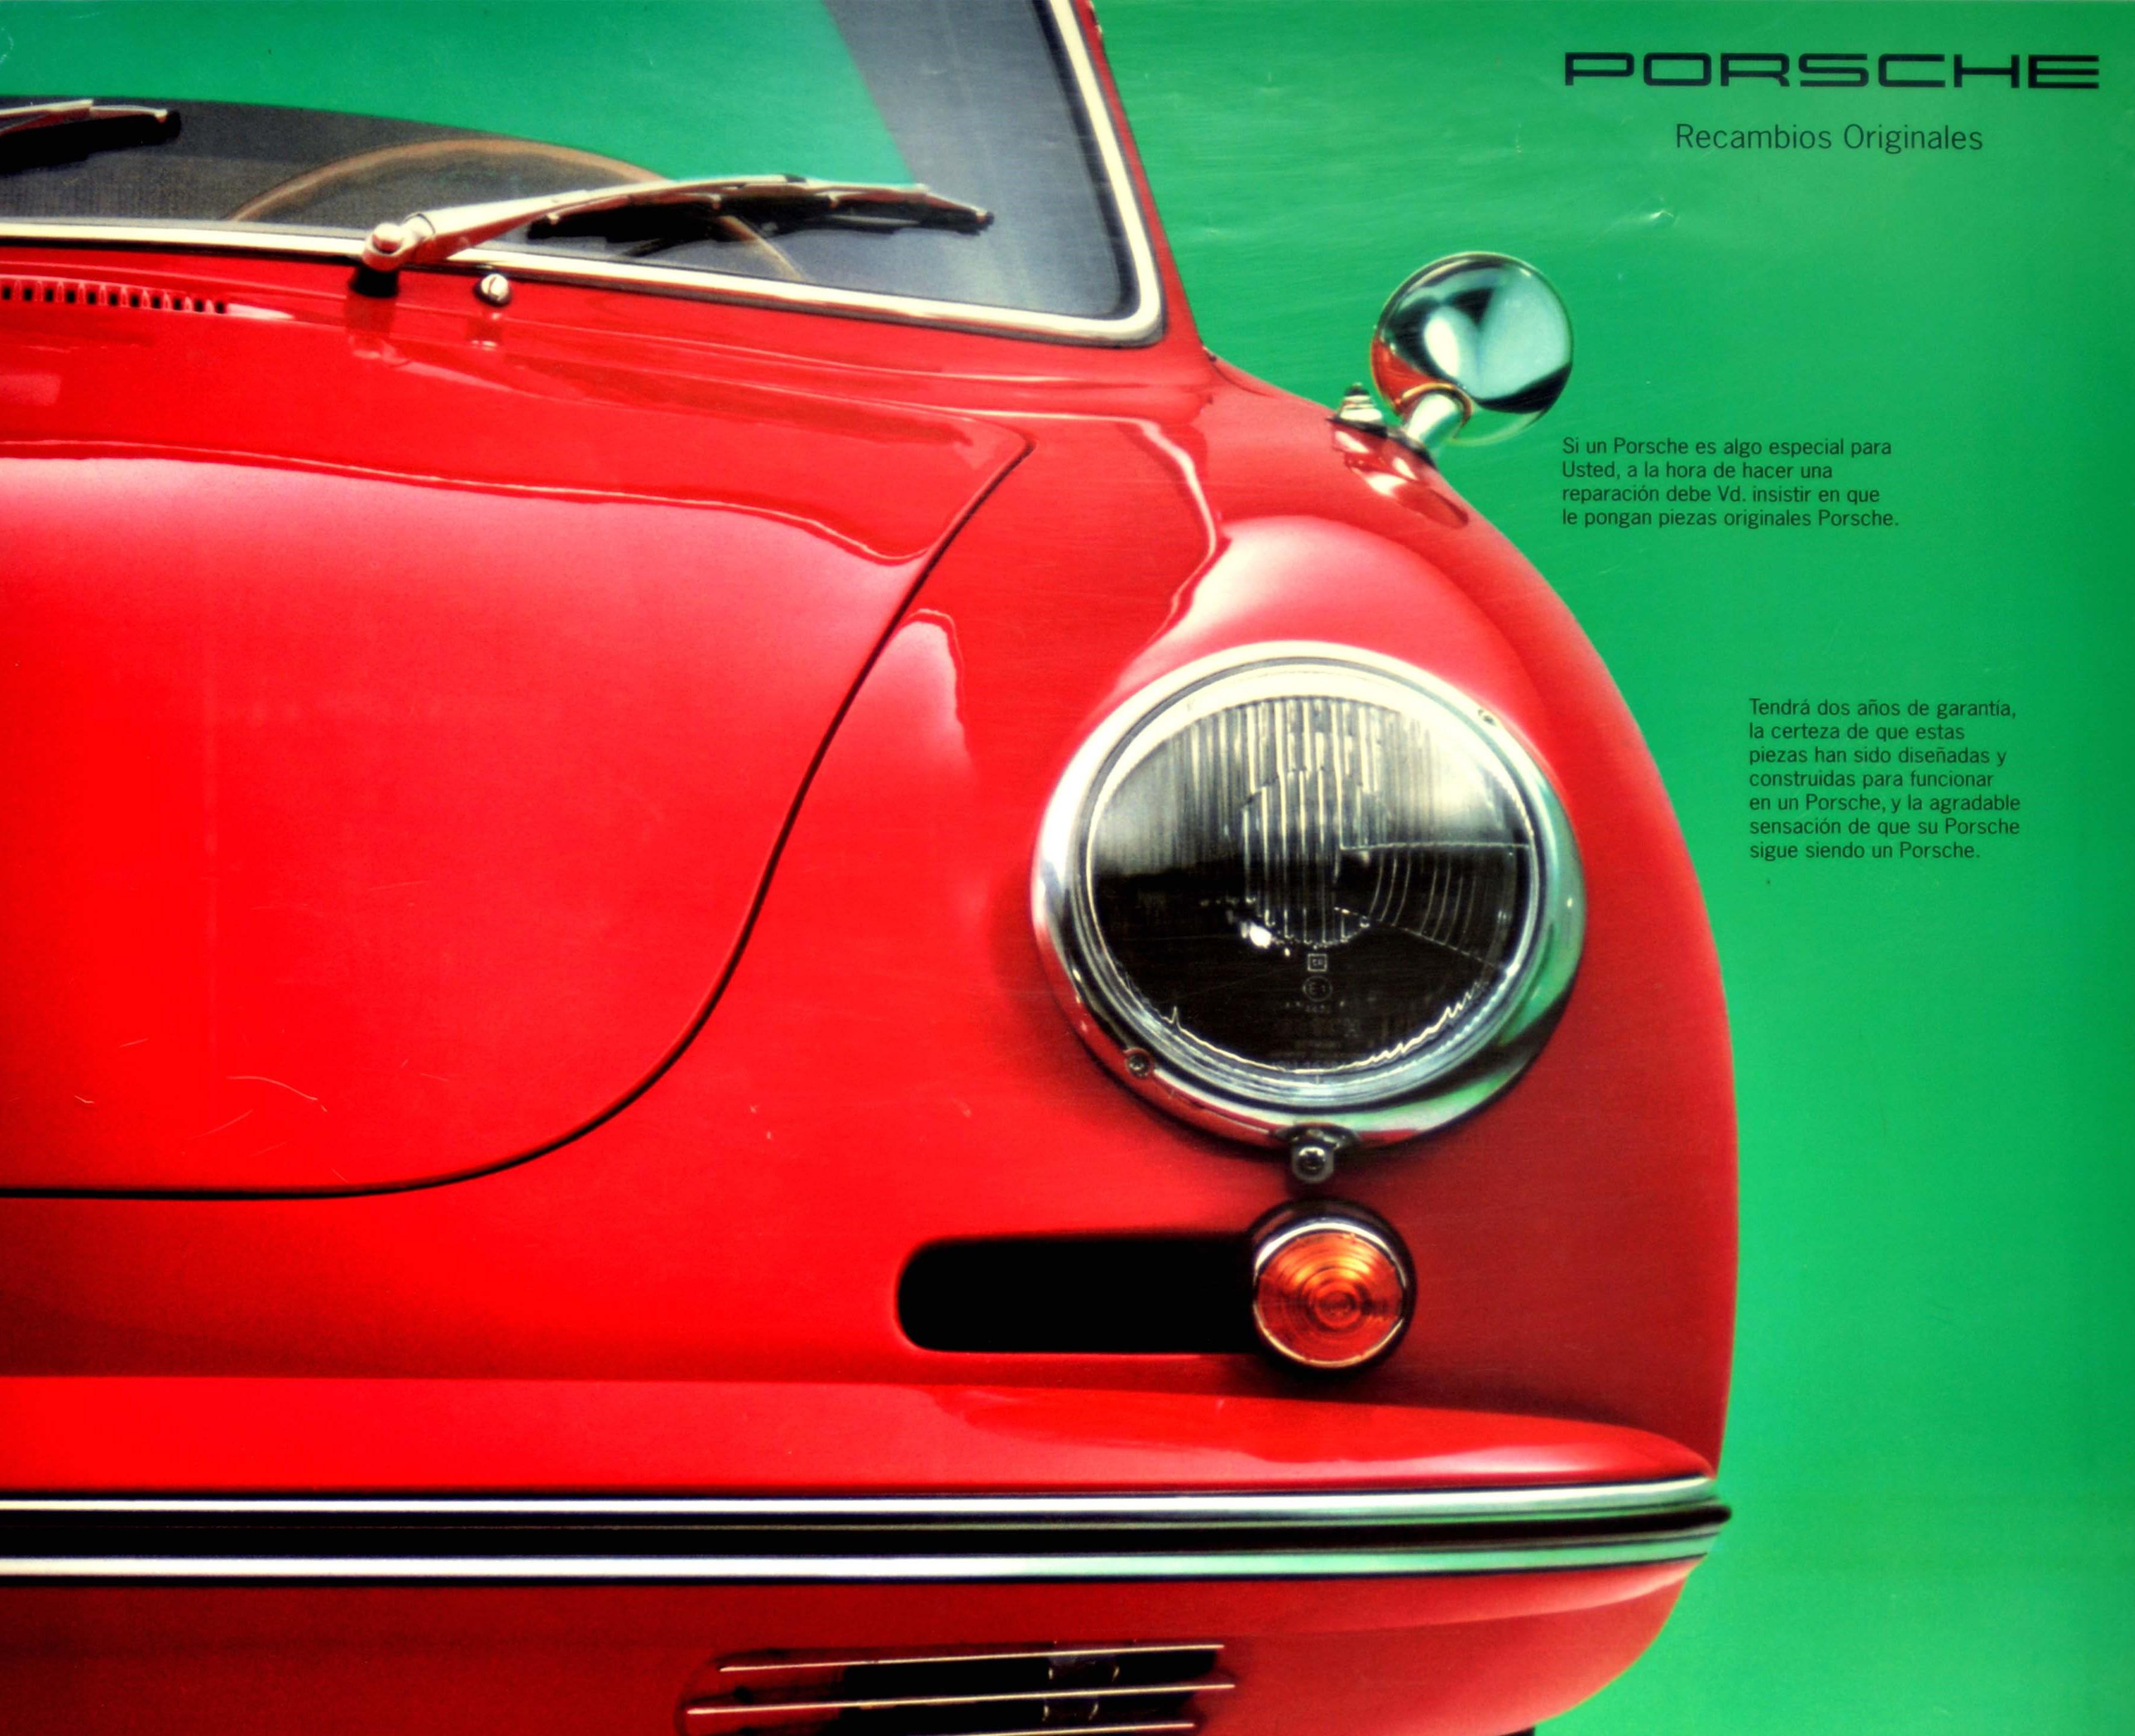 Original Vintage Poster 100% Porsche 356 B Classic Sports Car Advertising Design - Print by Unknown